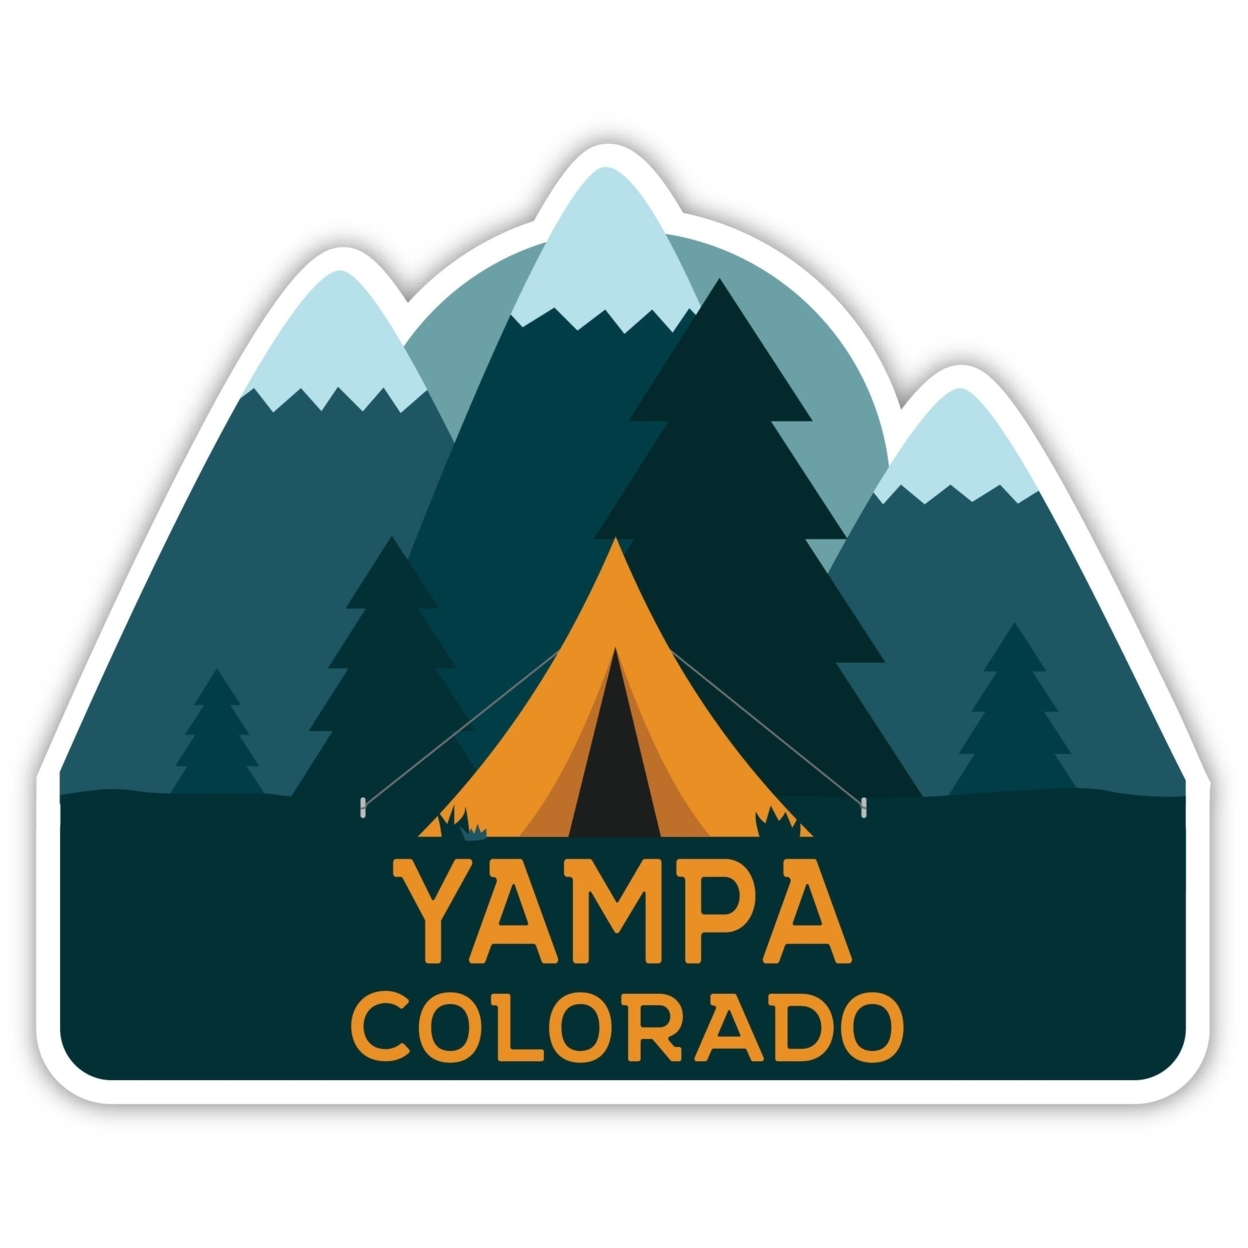 Yampa Colorado Souvenir Decorative Stickers (Choose Theme And Size) - Single Unit, 4-Inch, Tent